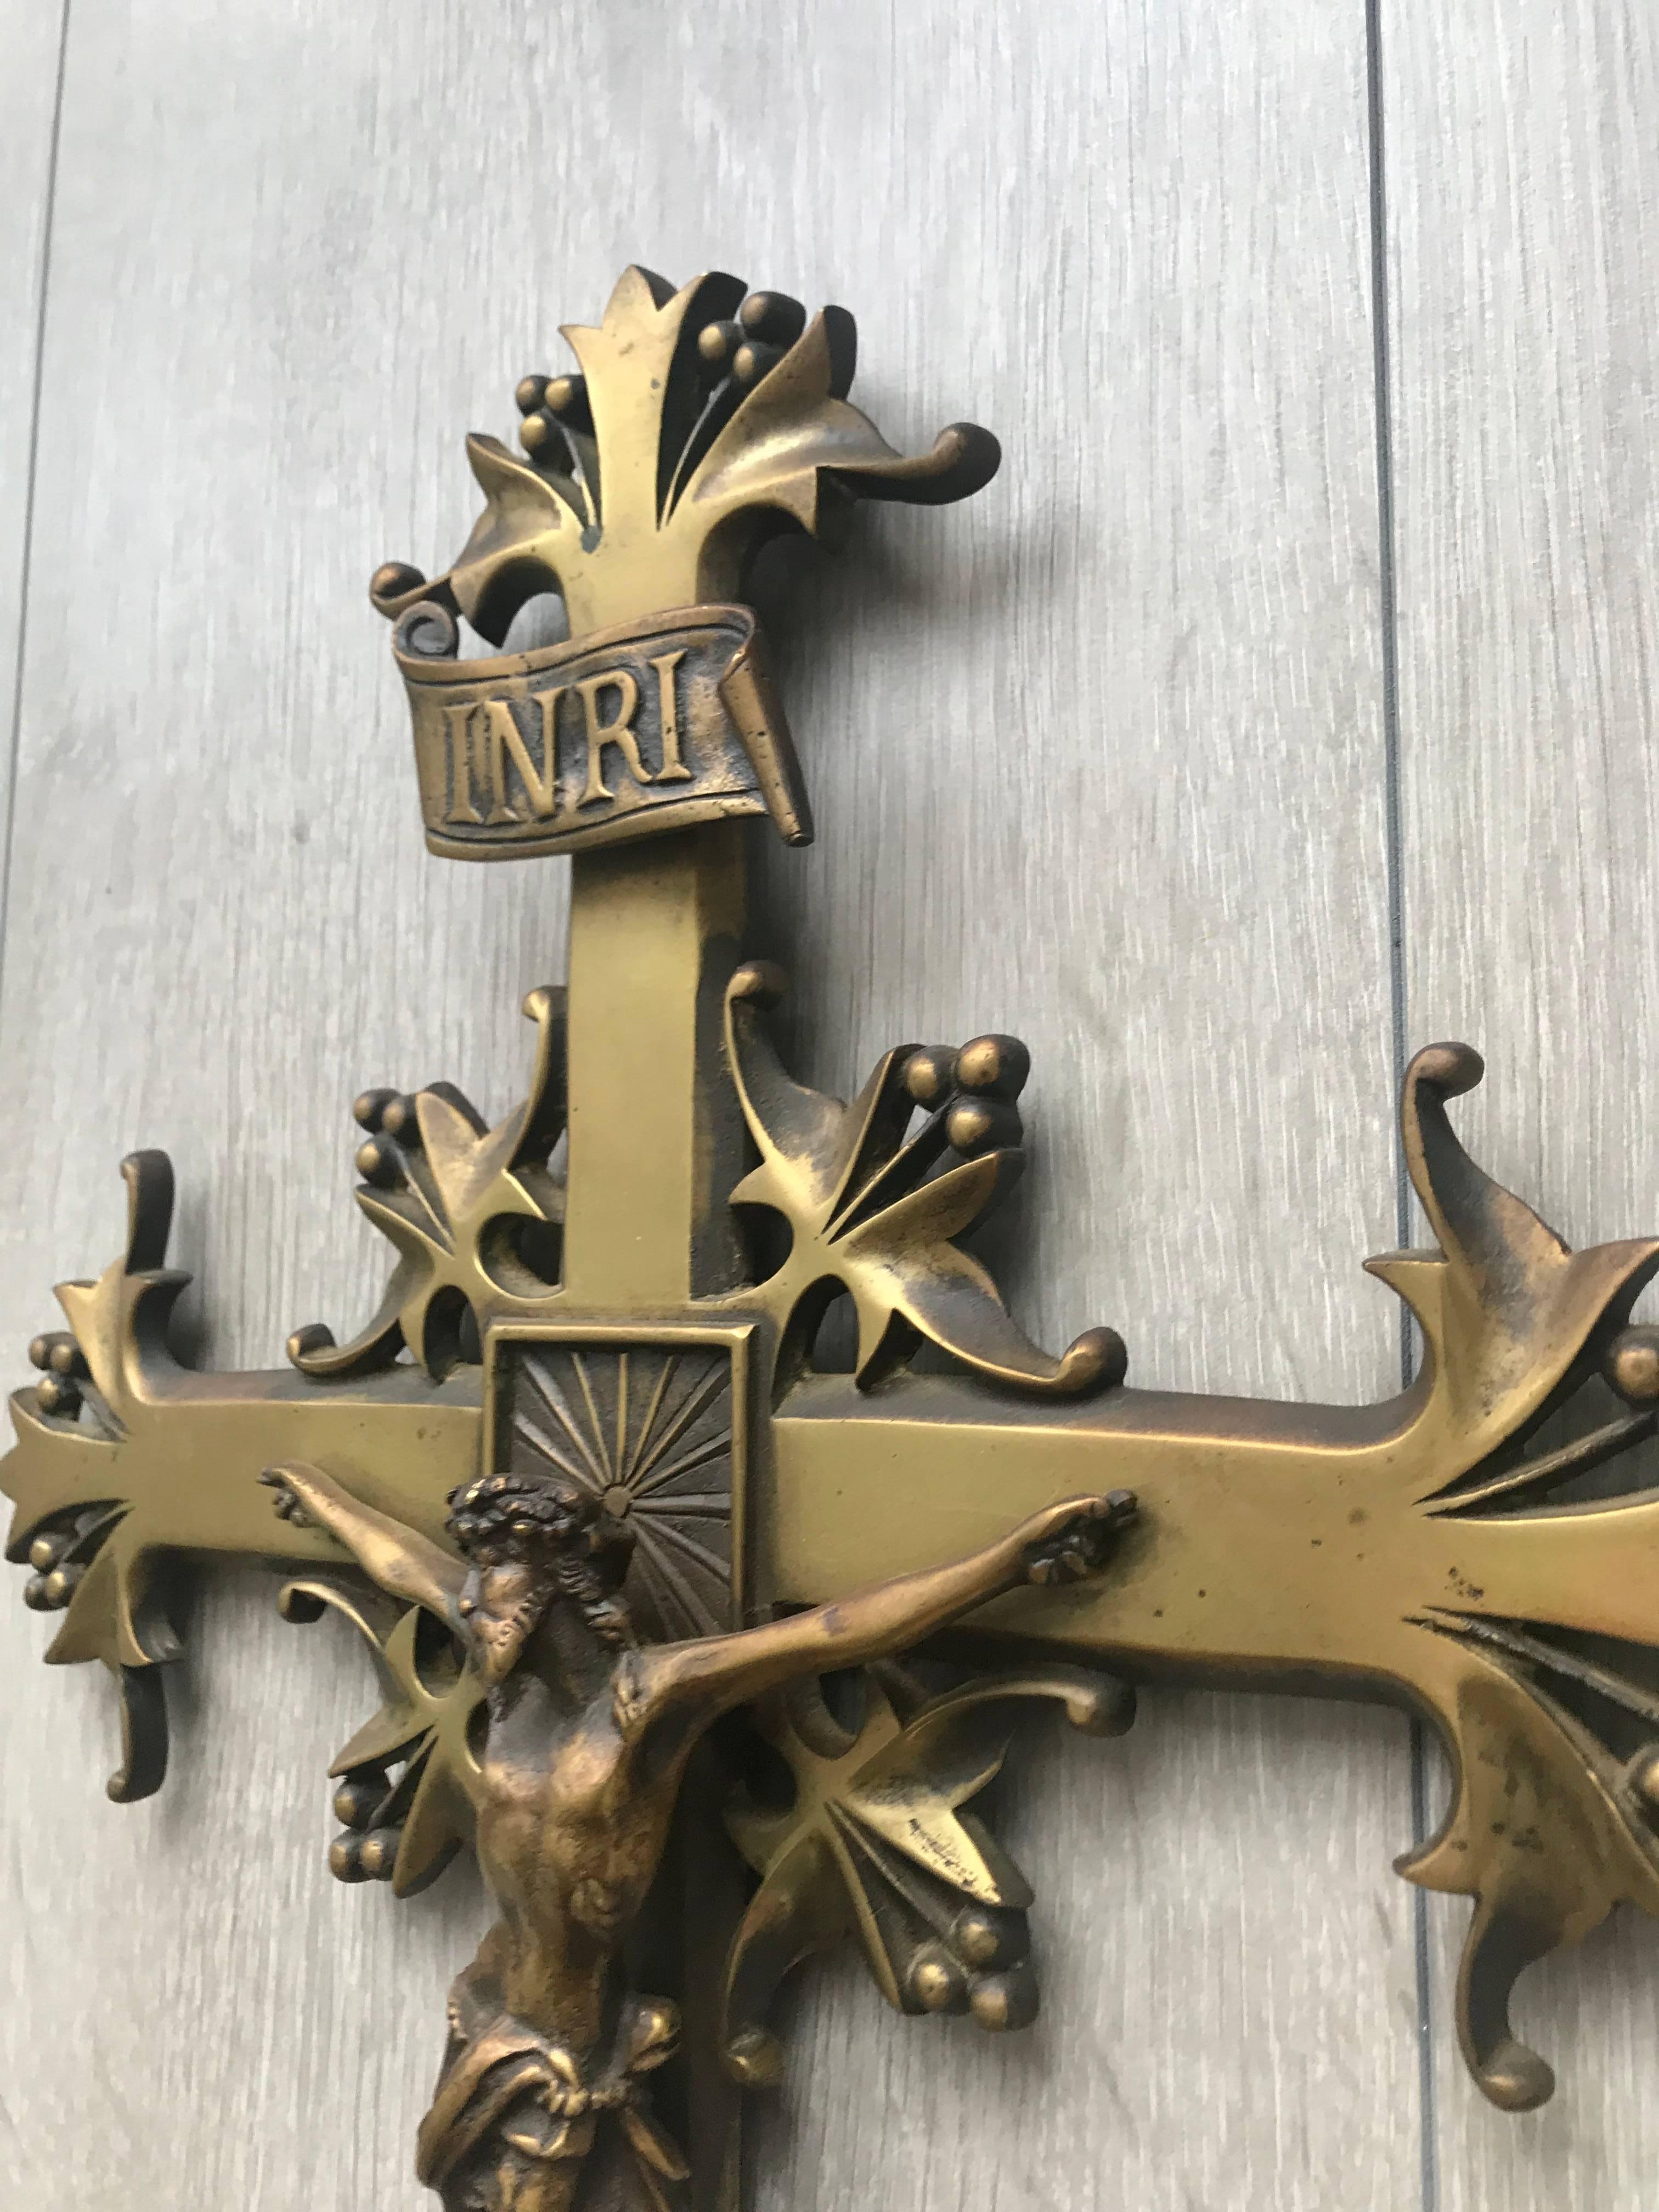 Stunning Jugendstil Era Crucifix Christ on Stylized Gothic Revival Bronze Cross 1